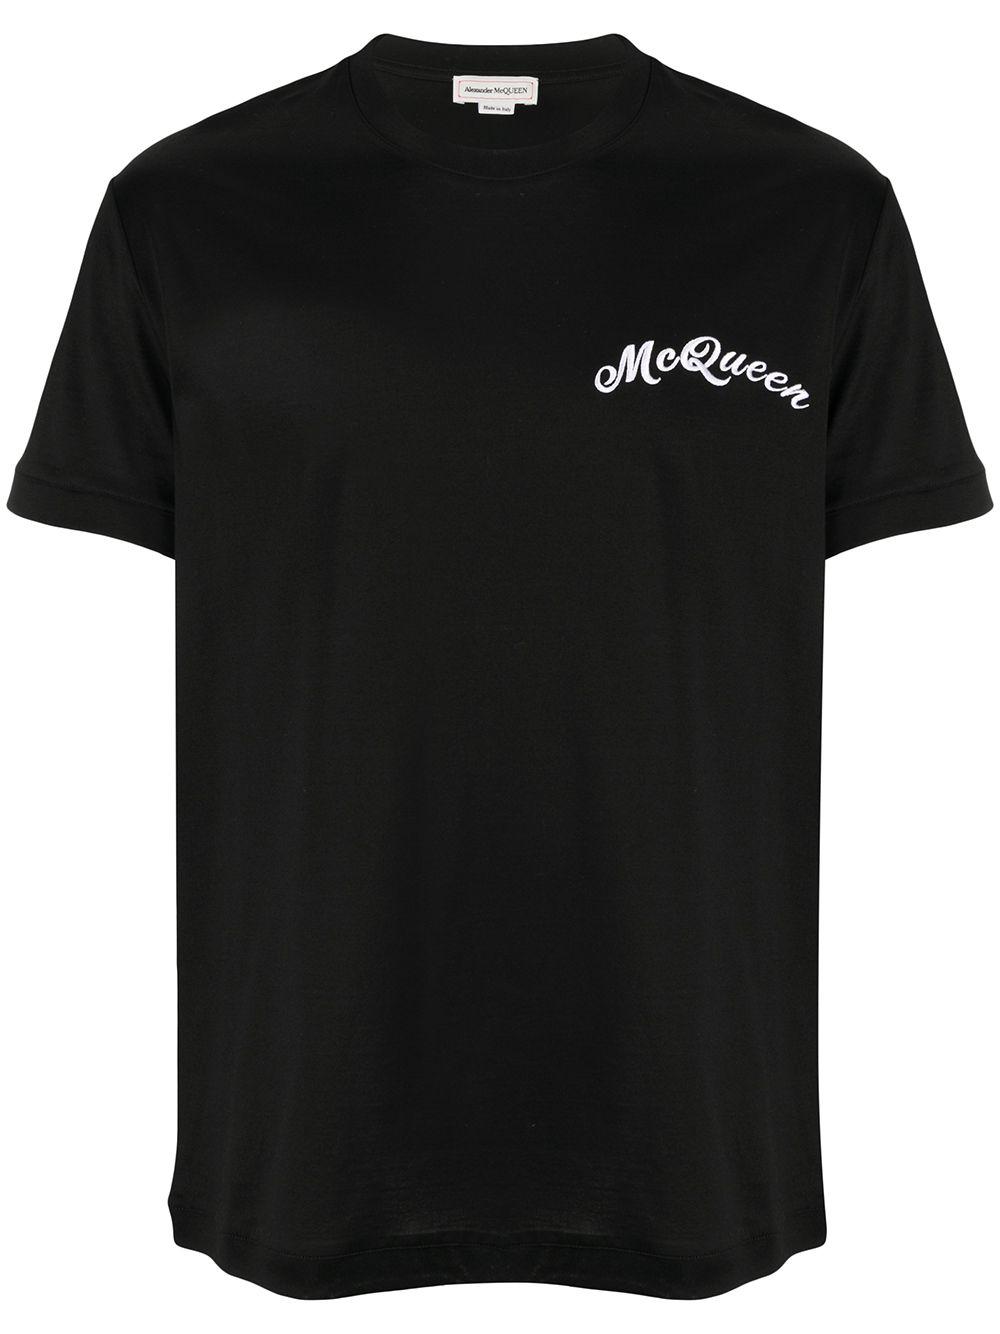 Alexander McQueen Logo T-shirt in Black for Men - Save 16% - Lyst